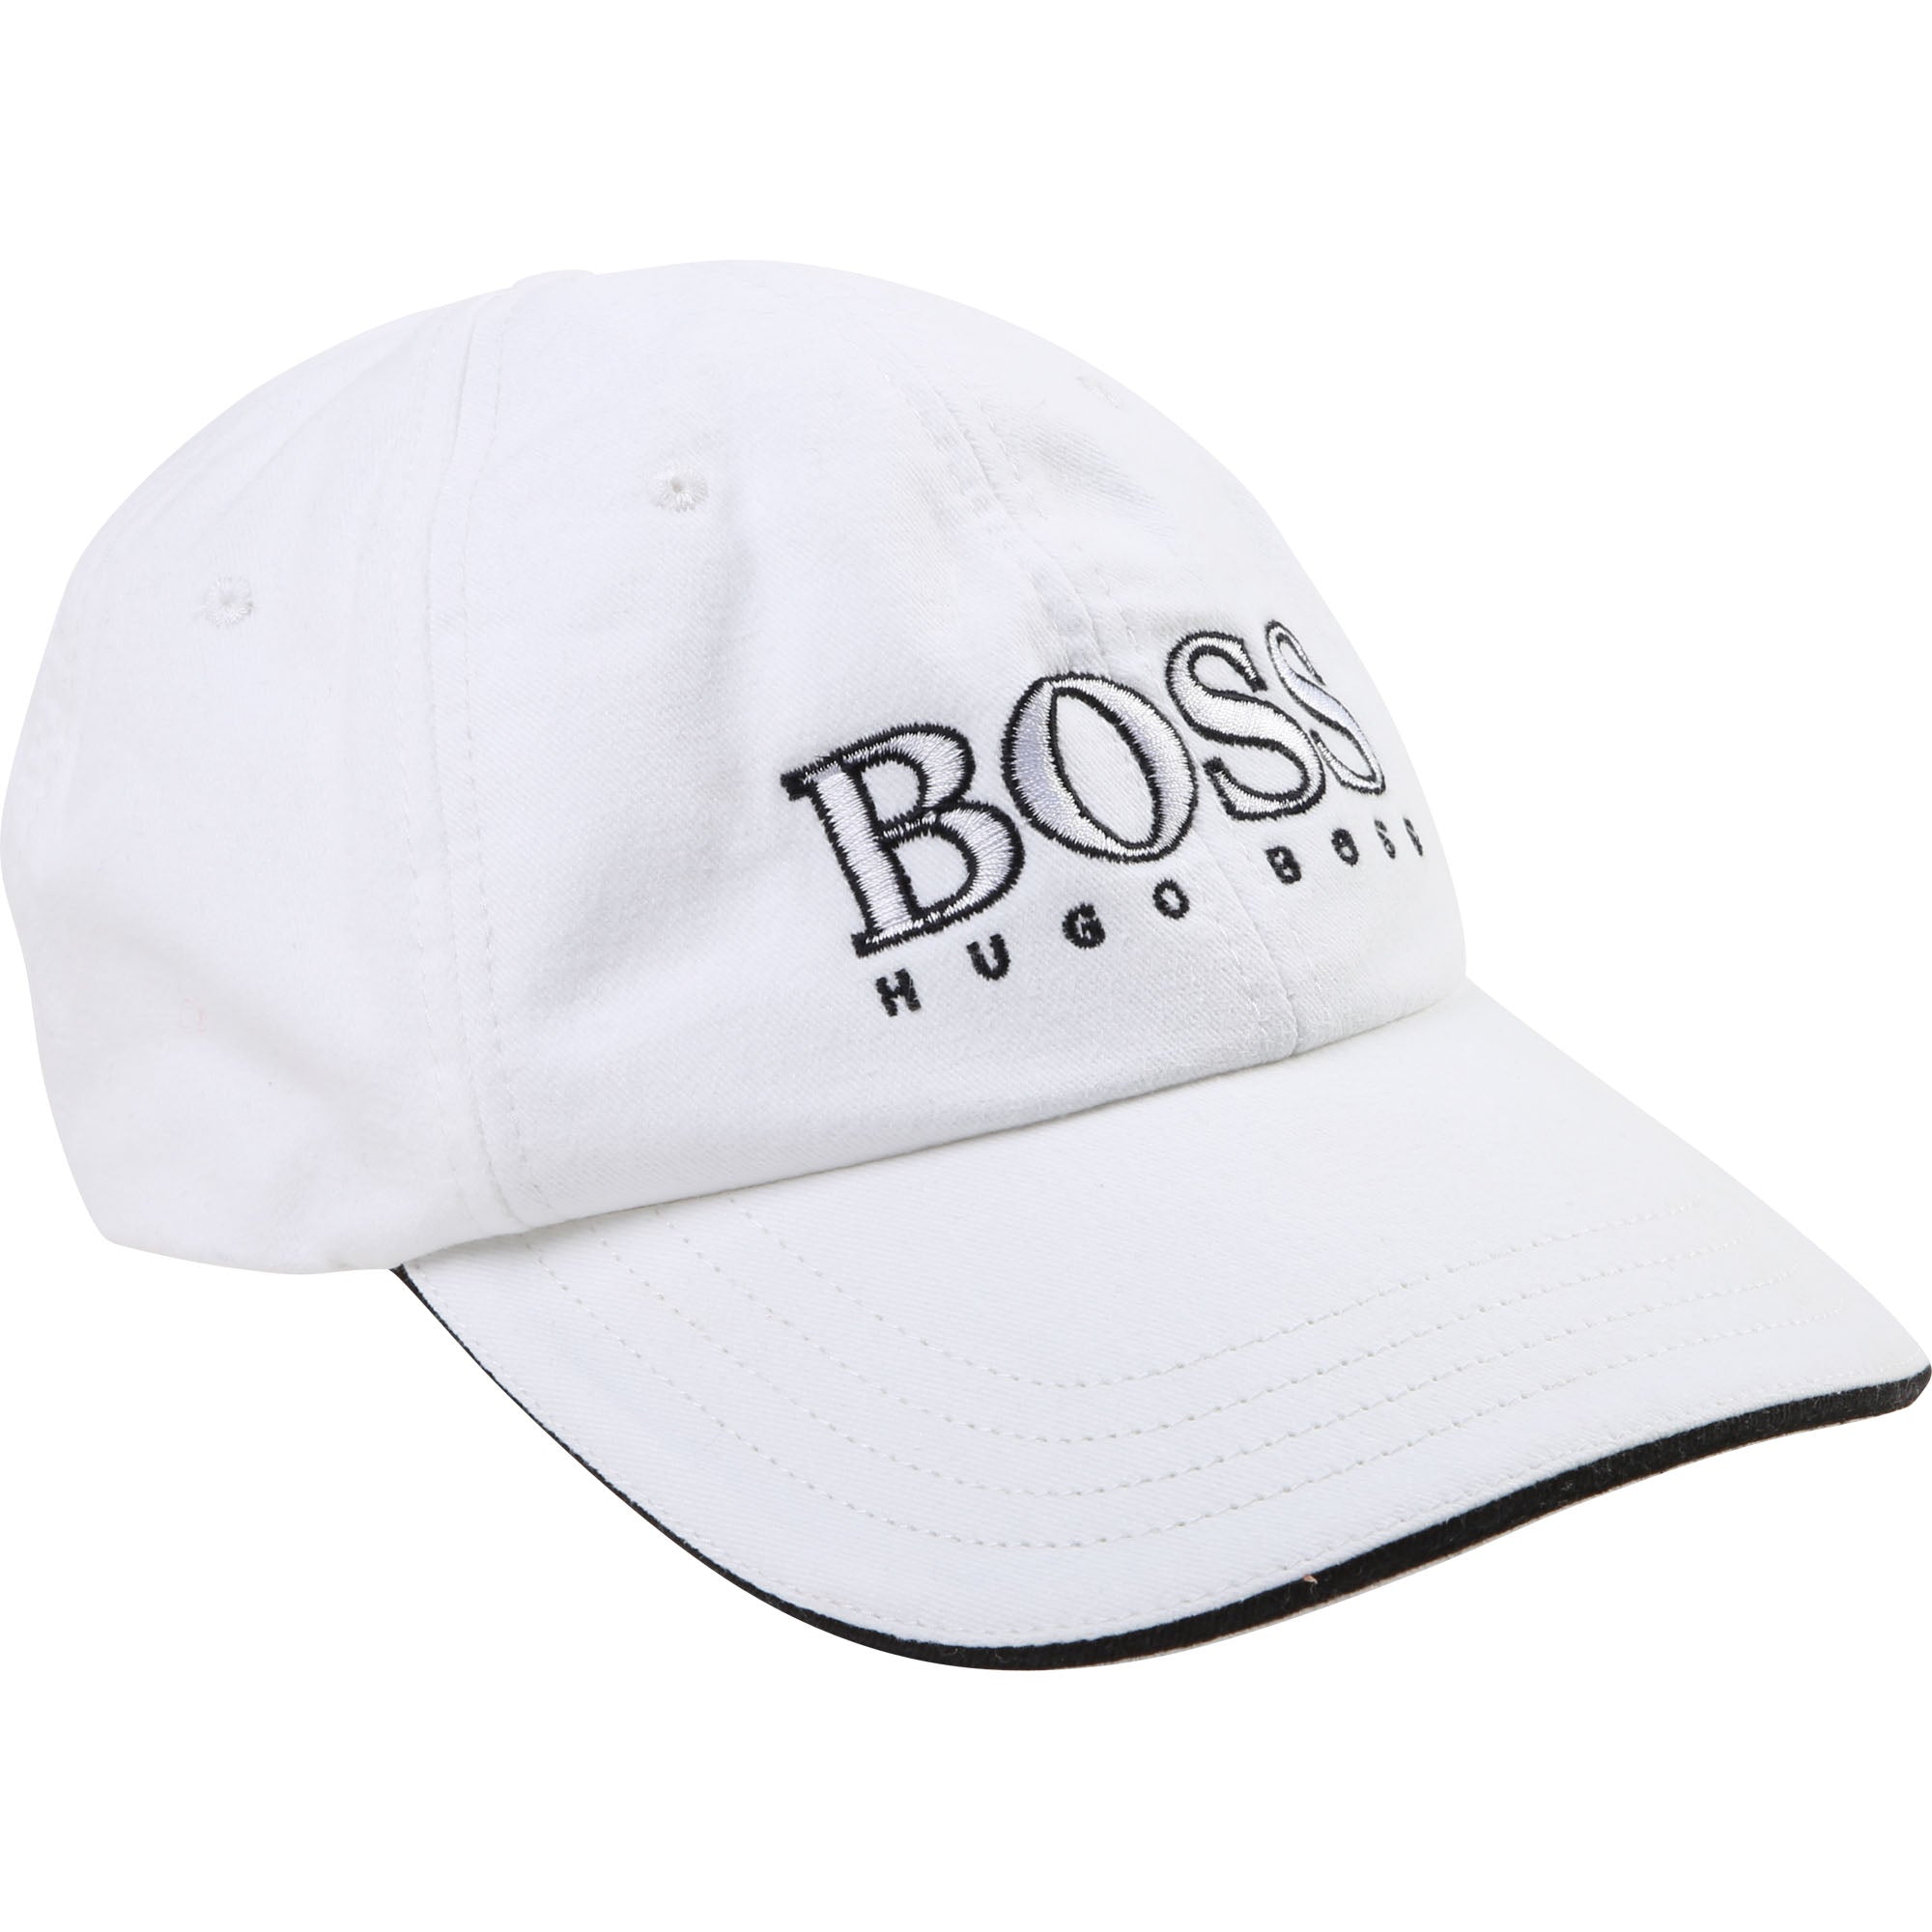 Boys White Cotton Hat